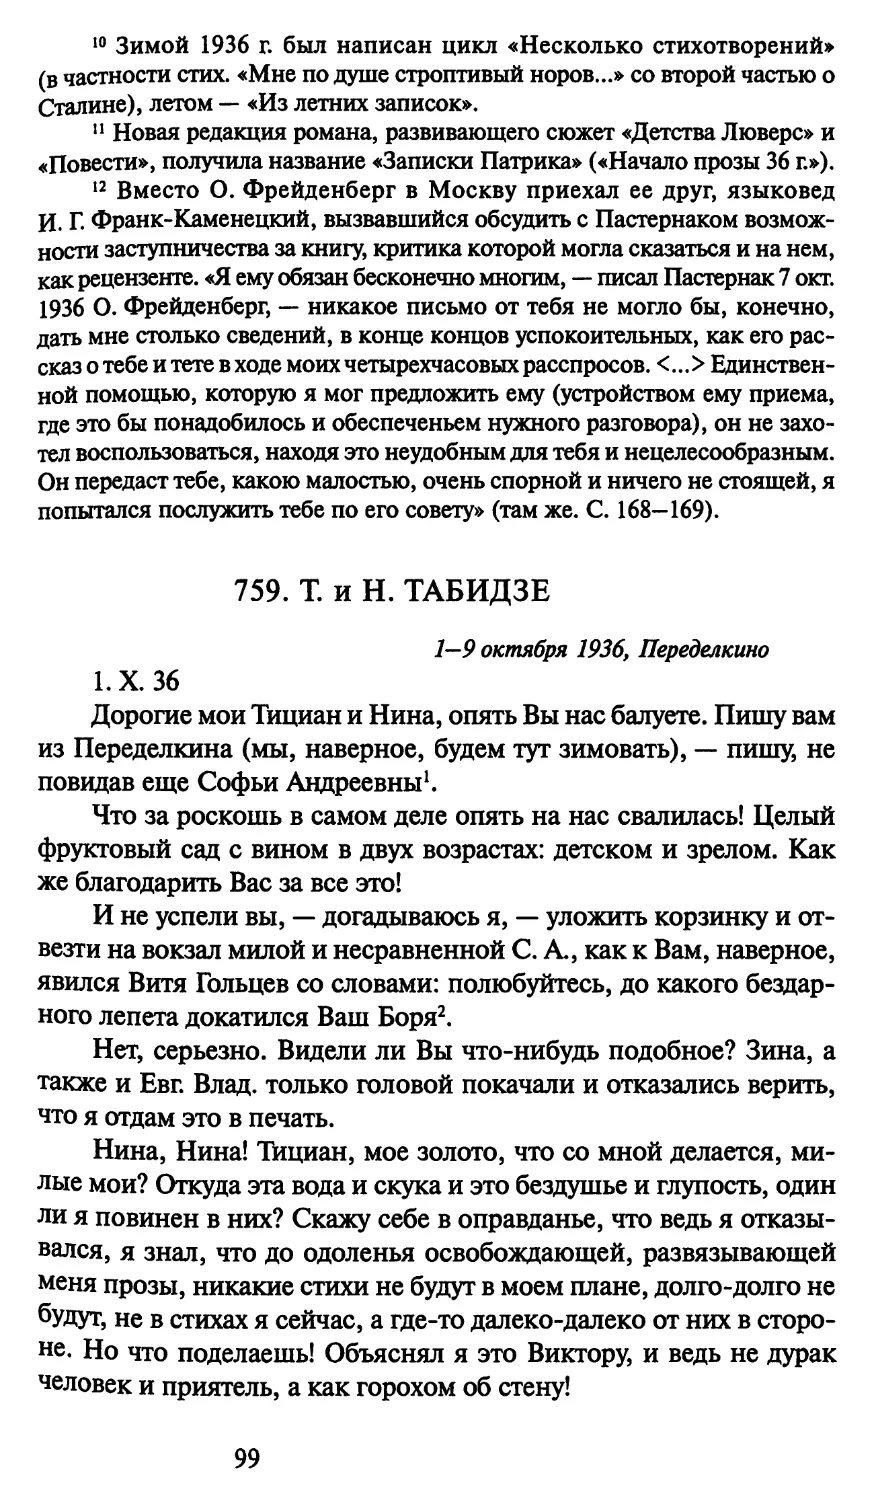 759. Т. и Н. Табидзе 1-9 октября 1936